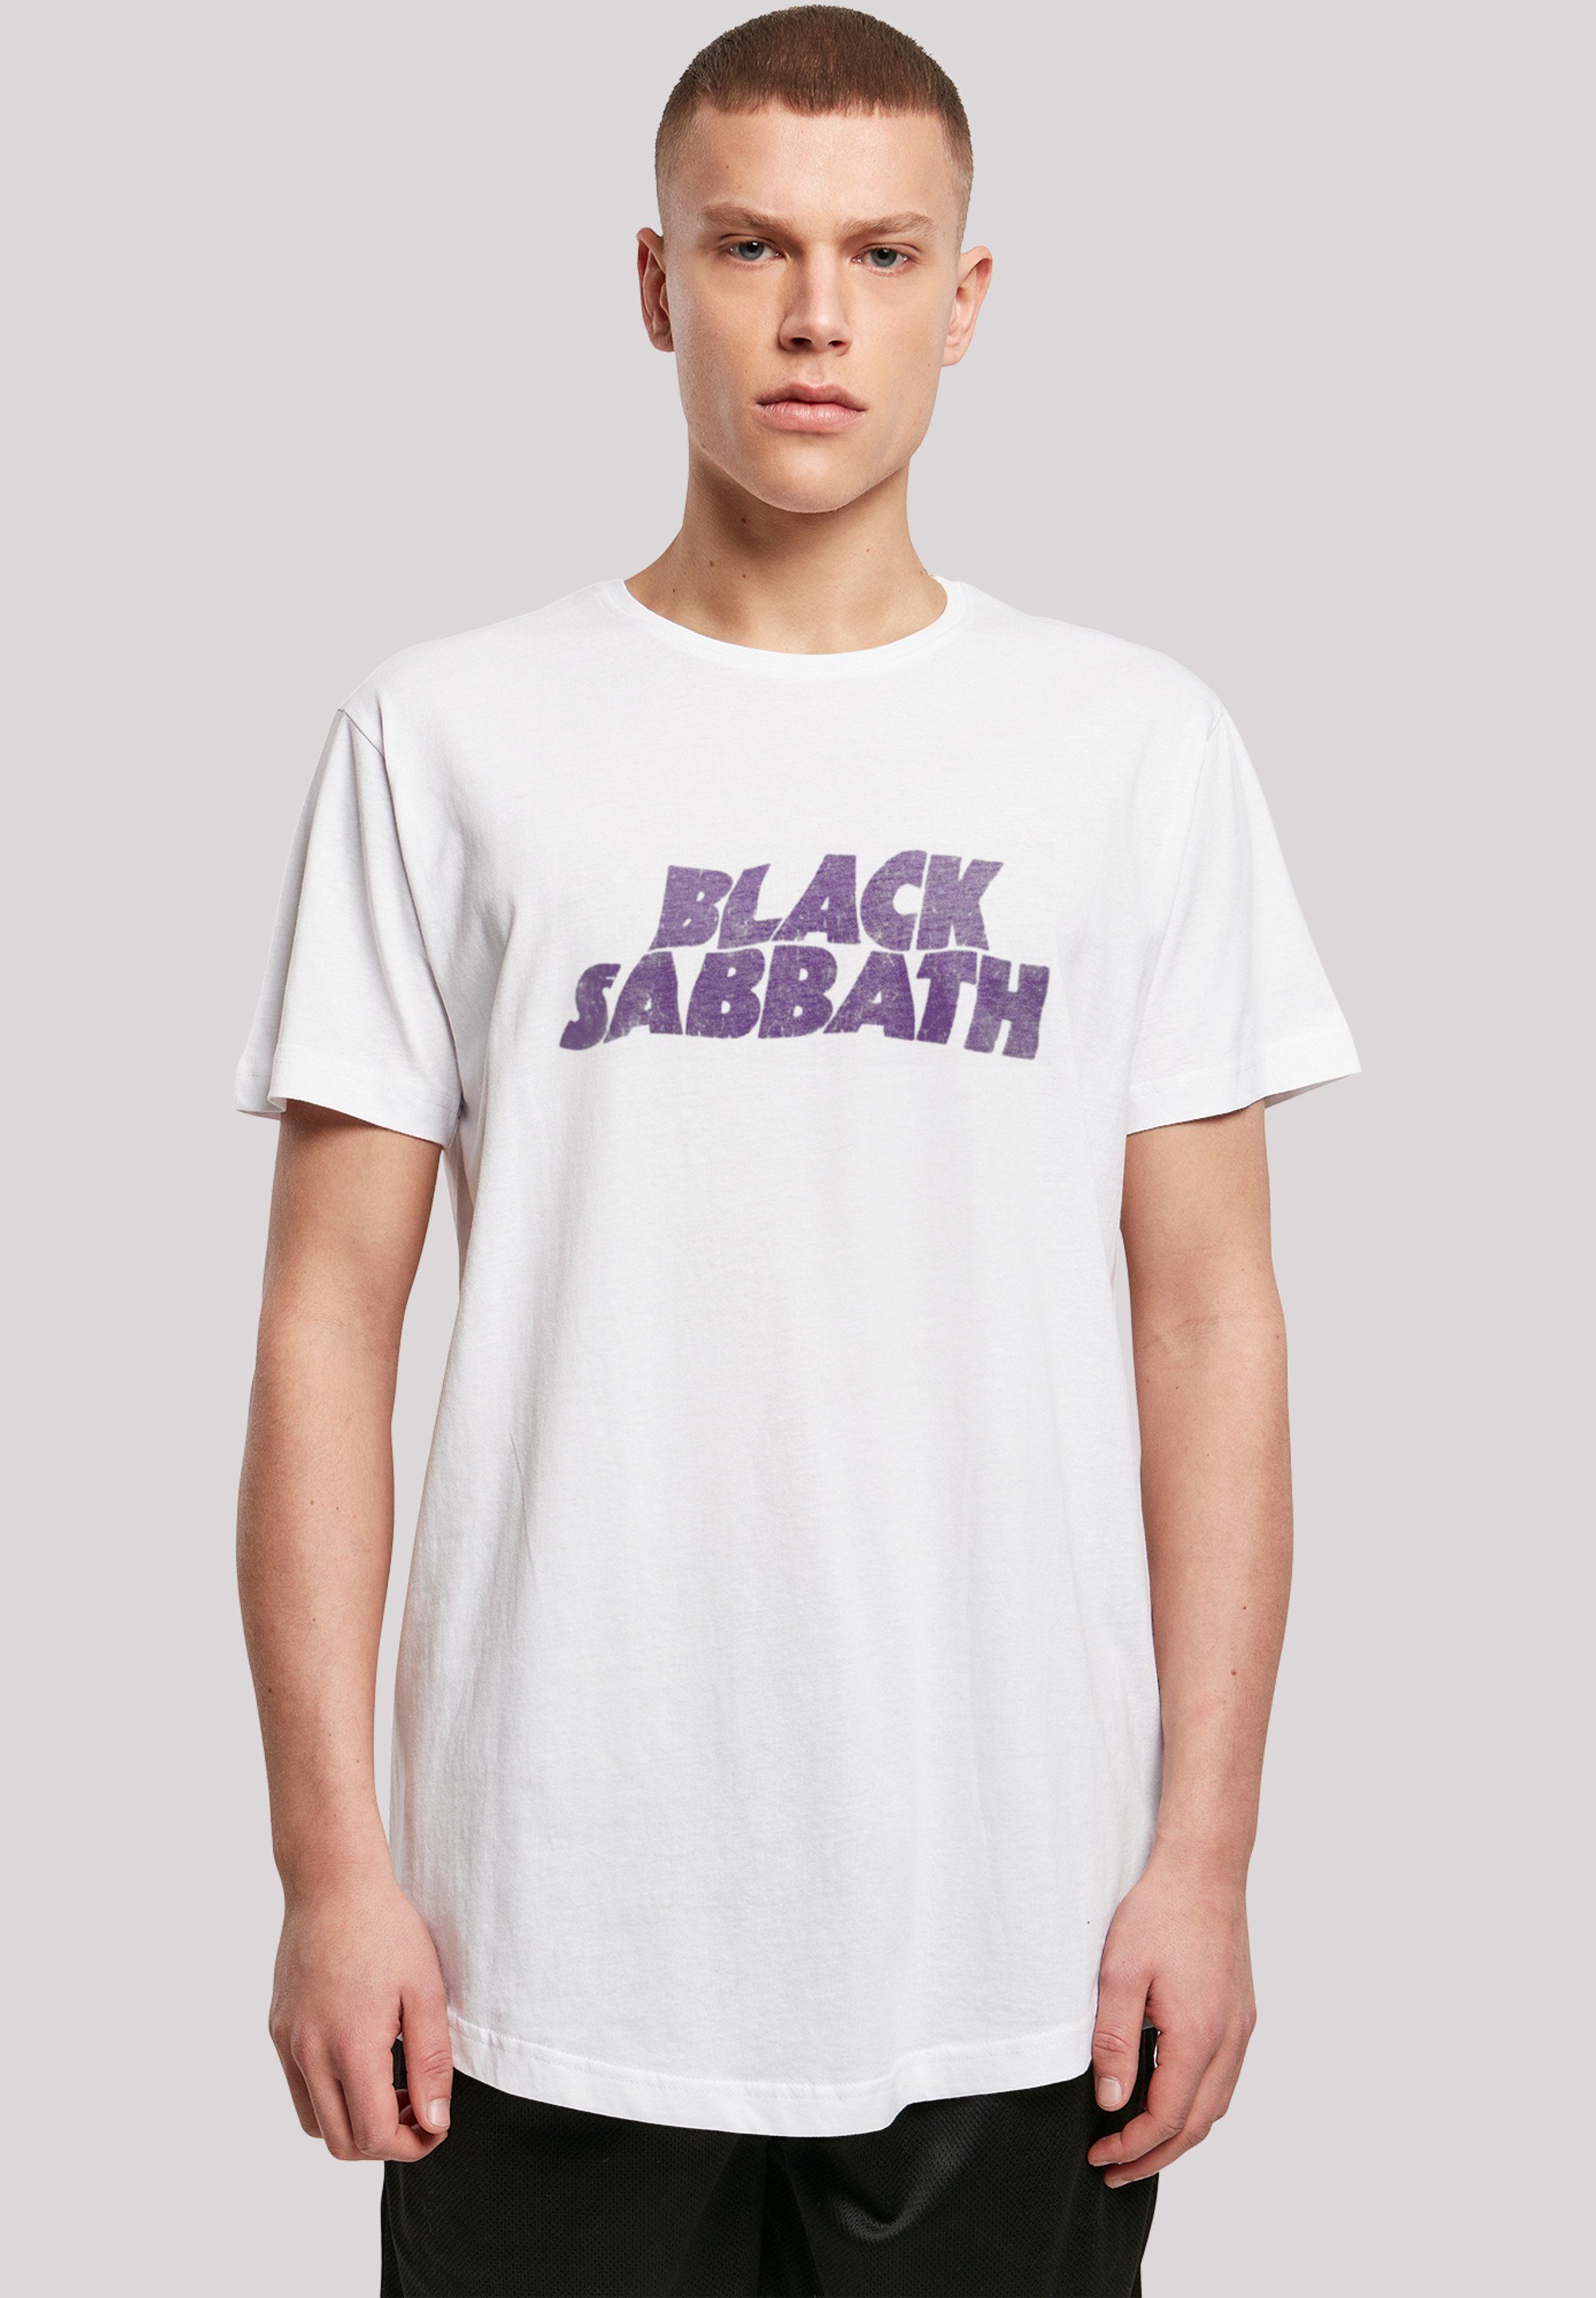 Band Logo hohem Tragekomfort Sabbath Heavy mit F4NT4STIC Black Black Sehr Baumwollstoff weicher Wavy Metal Print, T-Shirt Distressed